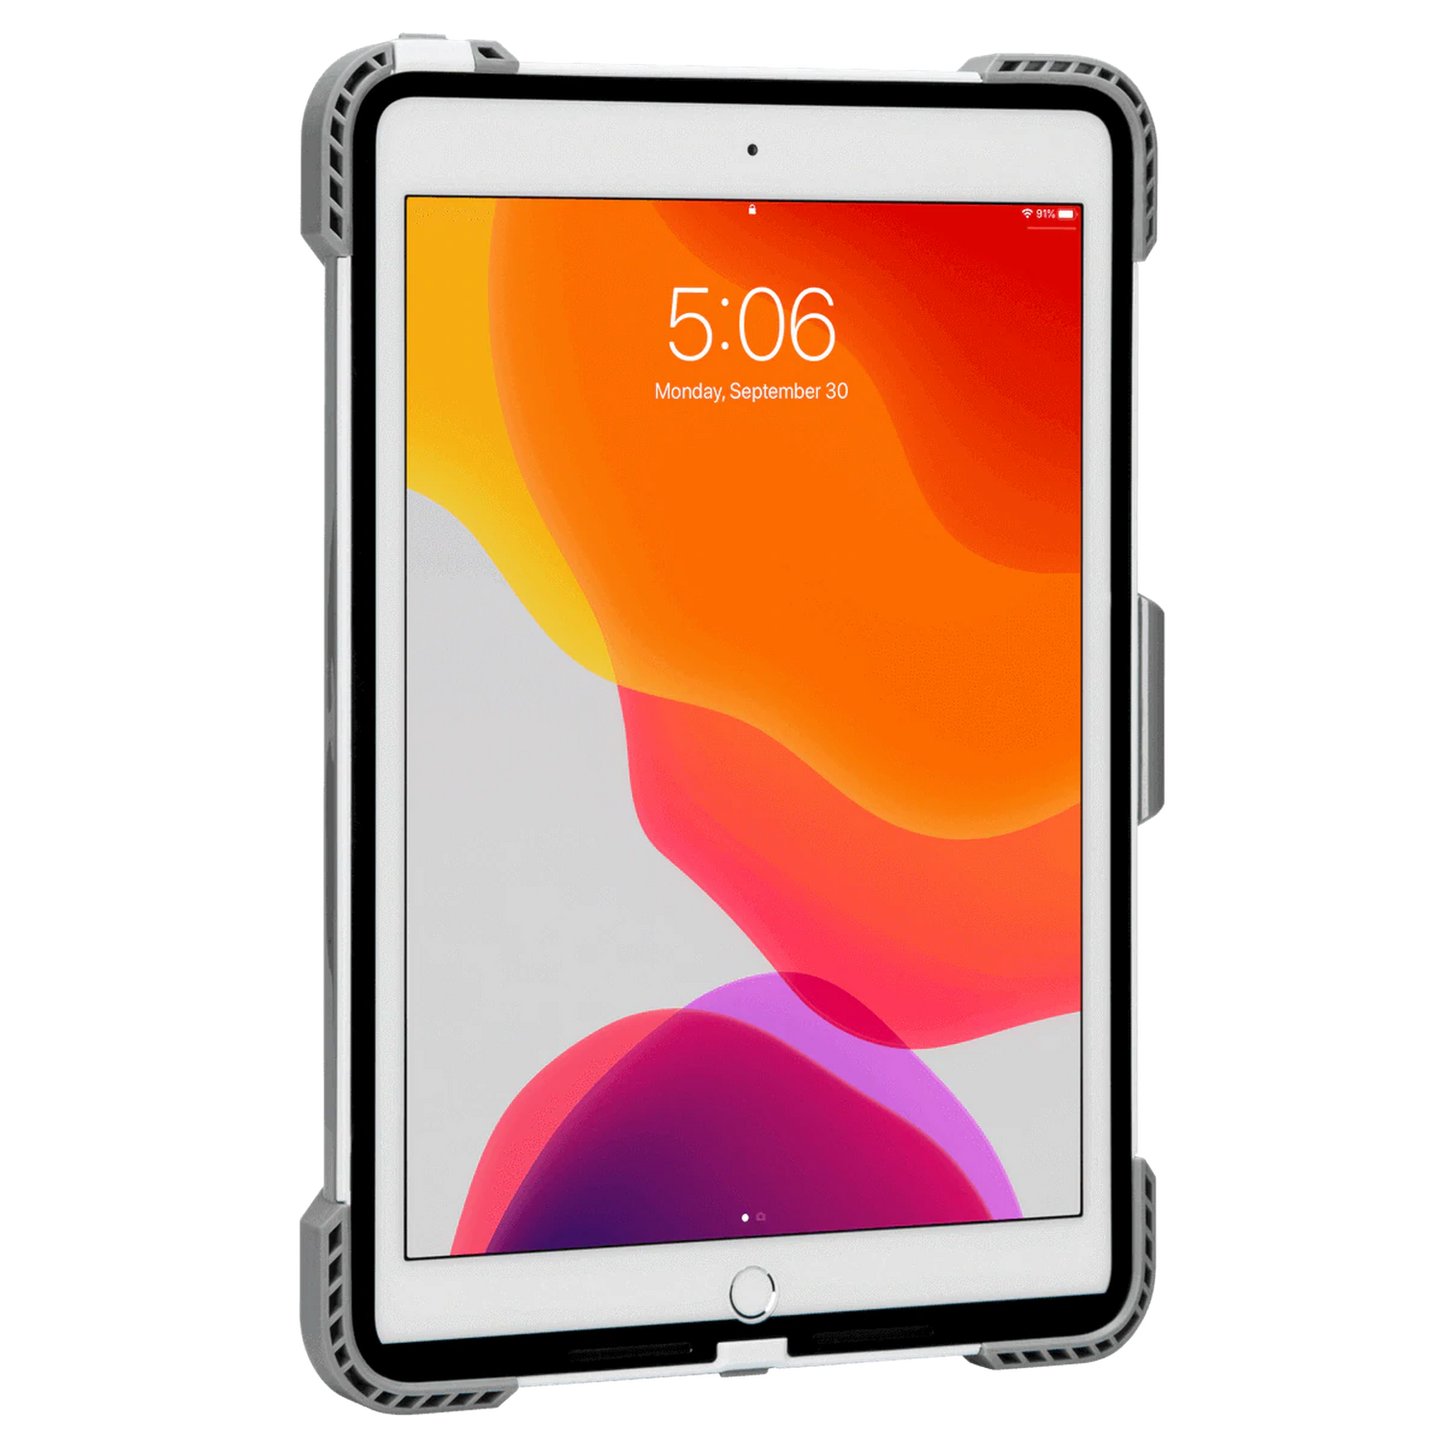 Funda Targus SafePort para iPad 10.2" Blanco/Gris